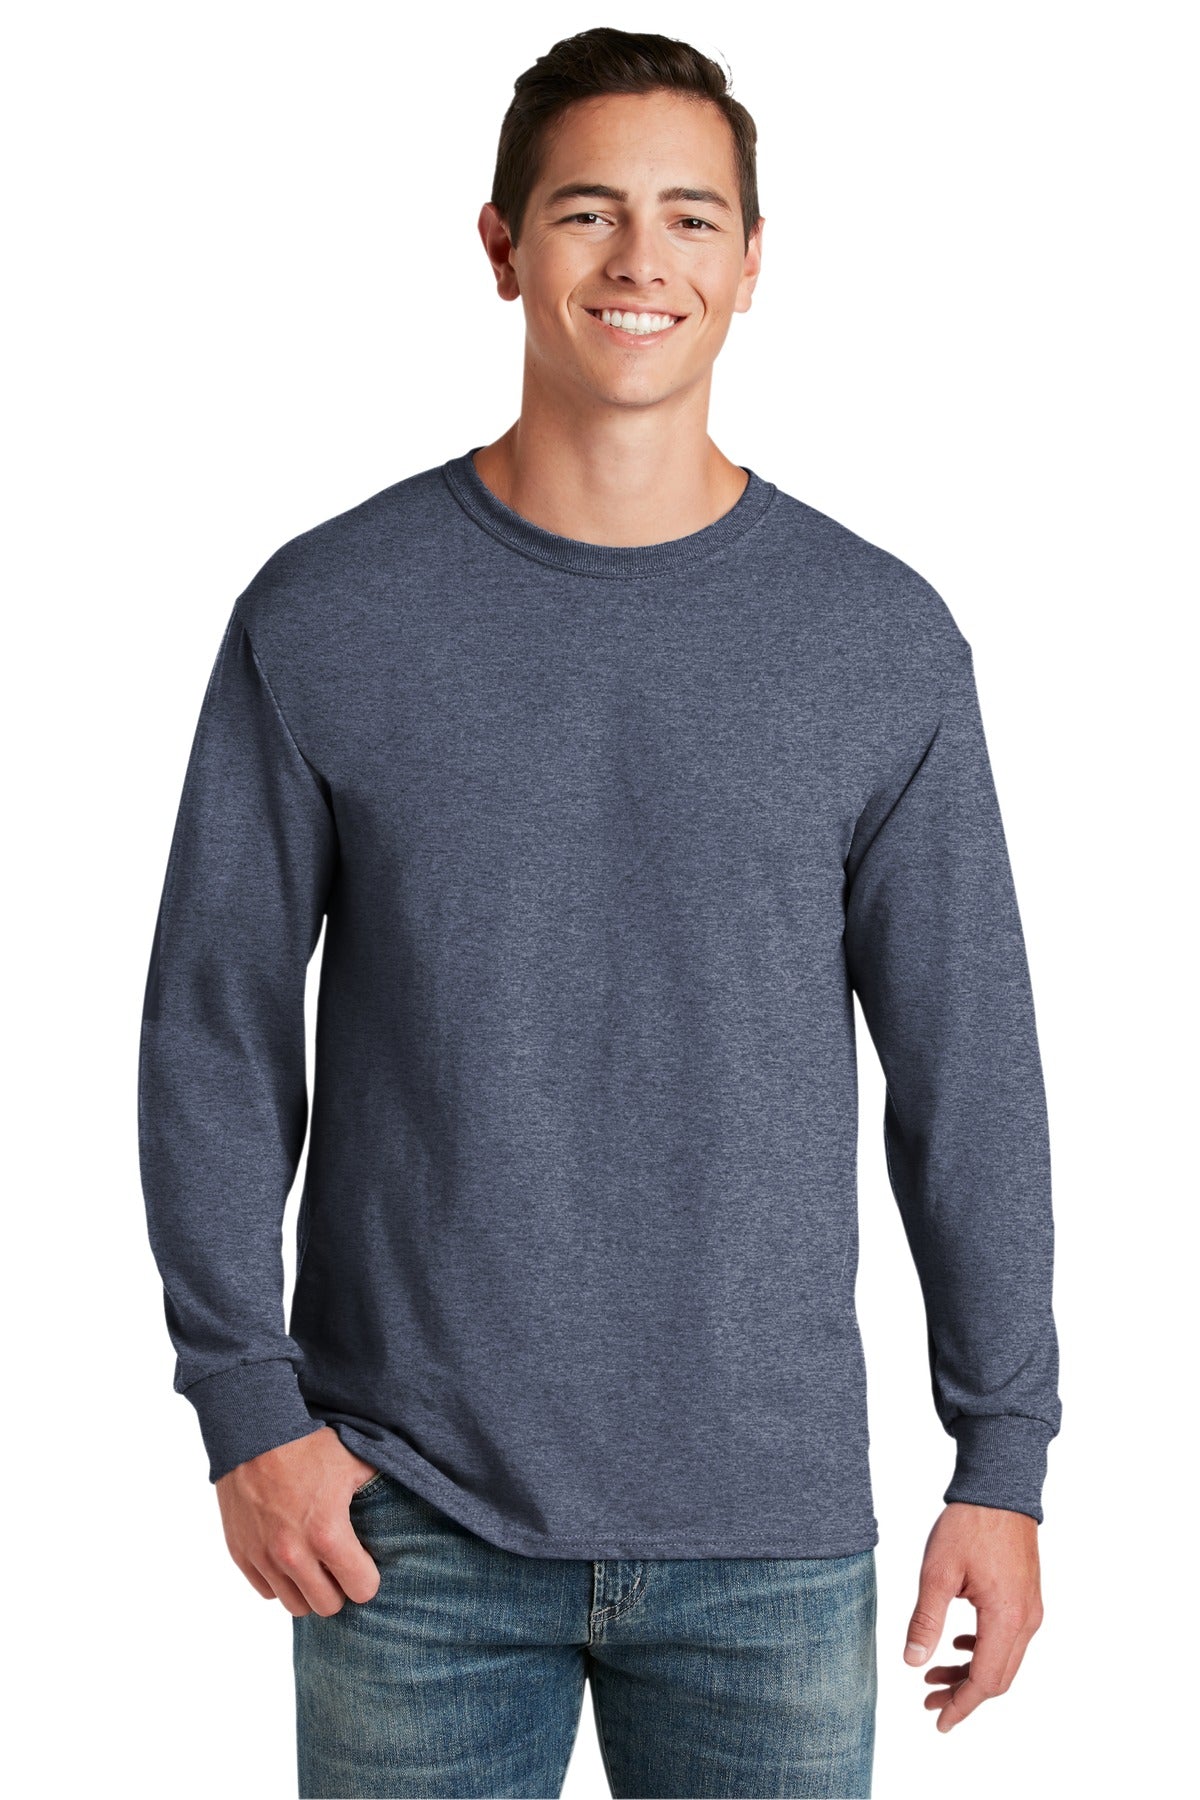 JERZEES® - Dri-Power® 50/50 Cotton/Poly Long Sleeve T-Shirt. 29LS [Vintage Heather Navy] - DFW Impression